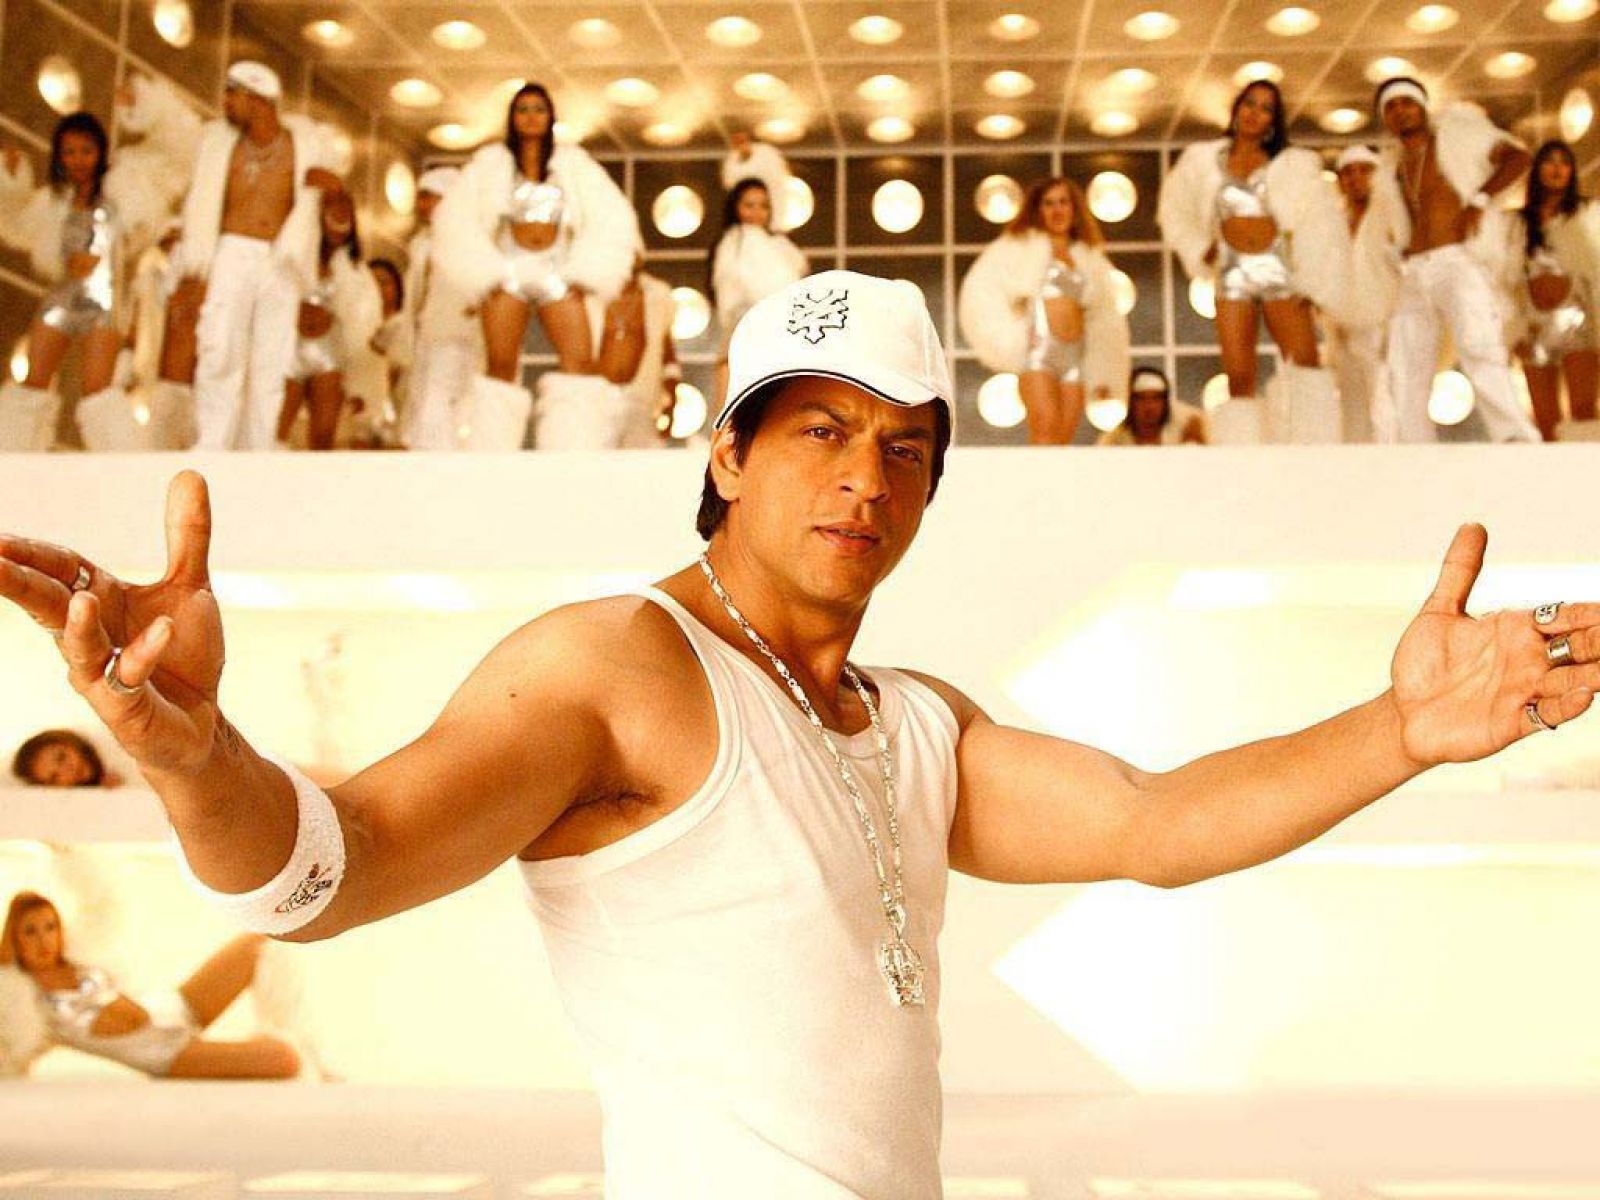 Shahrukh Khan Form Kuch Kuch Hota Hai. HD Bollywood Actors Wallpaper for Mobile and Desktop